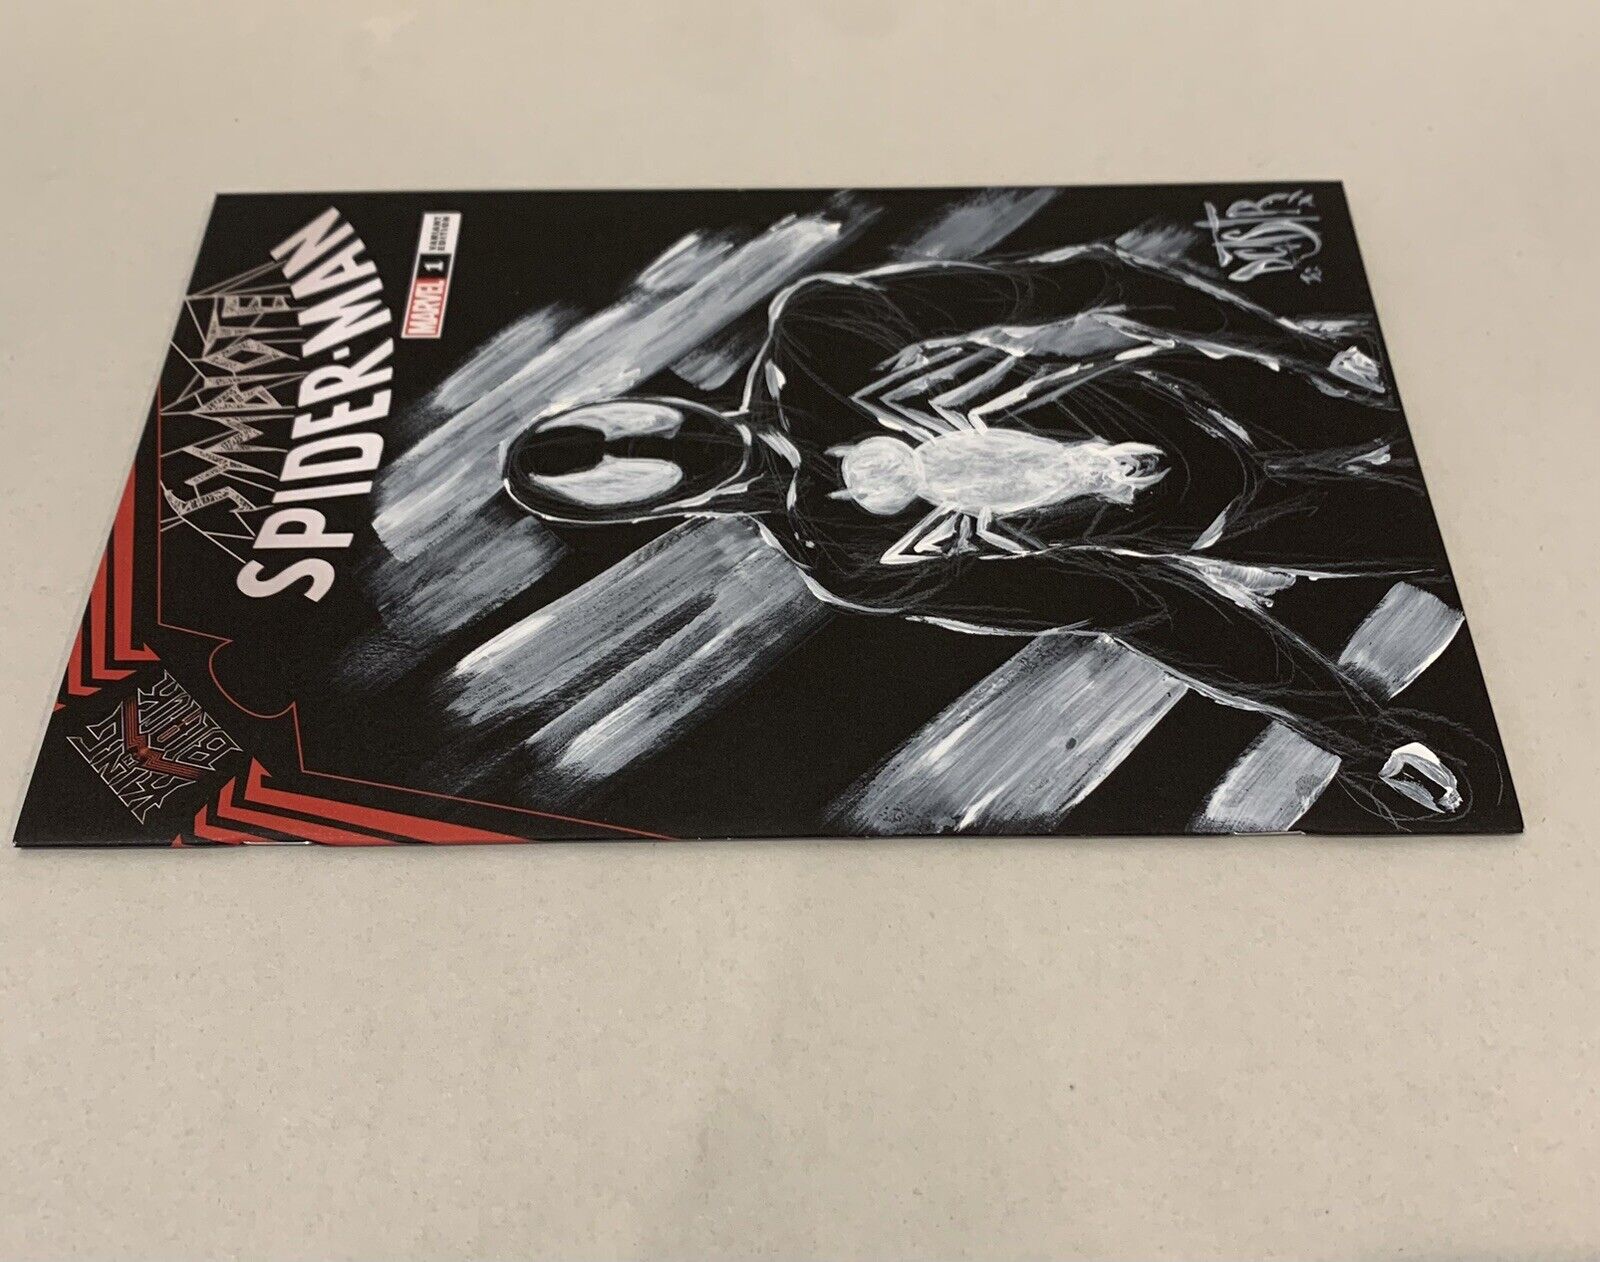 SYMBIOTE SPIDER-MAN #1 Blank Cover Variant  Comic w Original DAVE CASTR Art COA